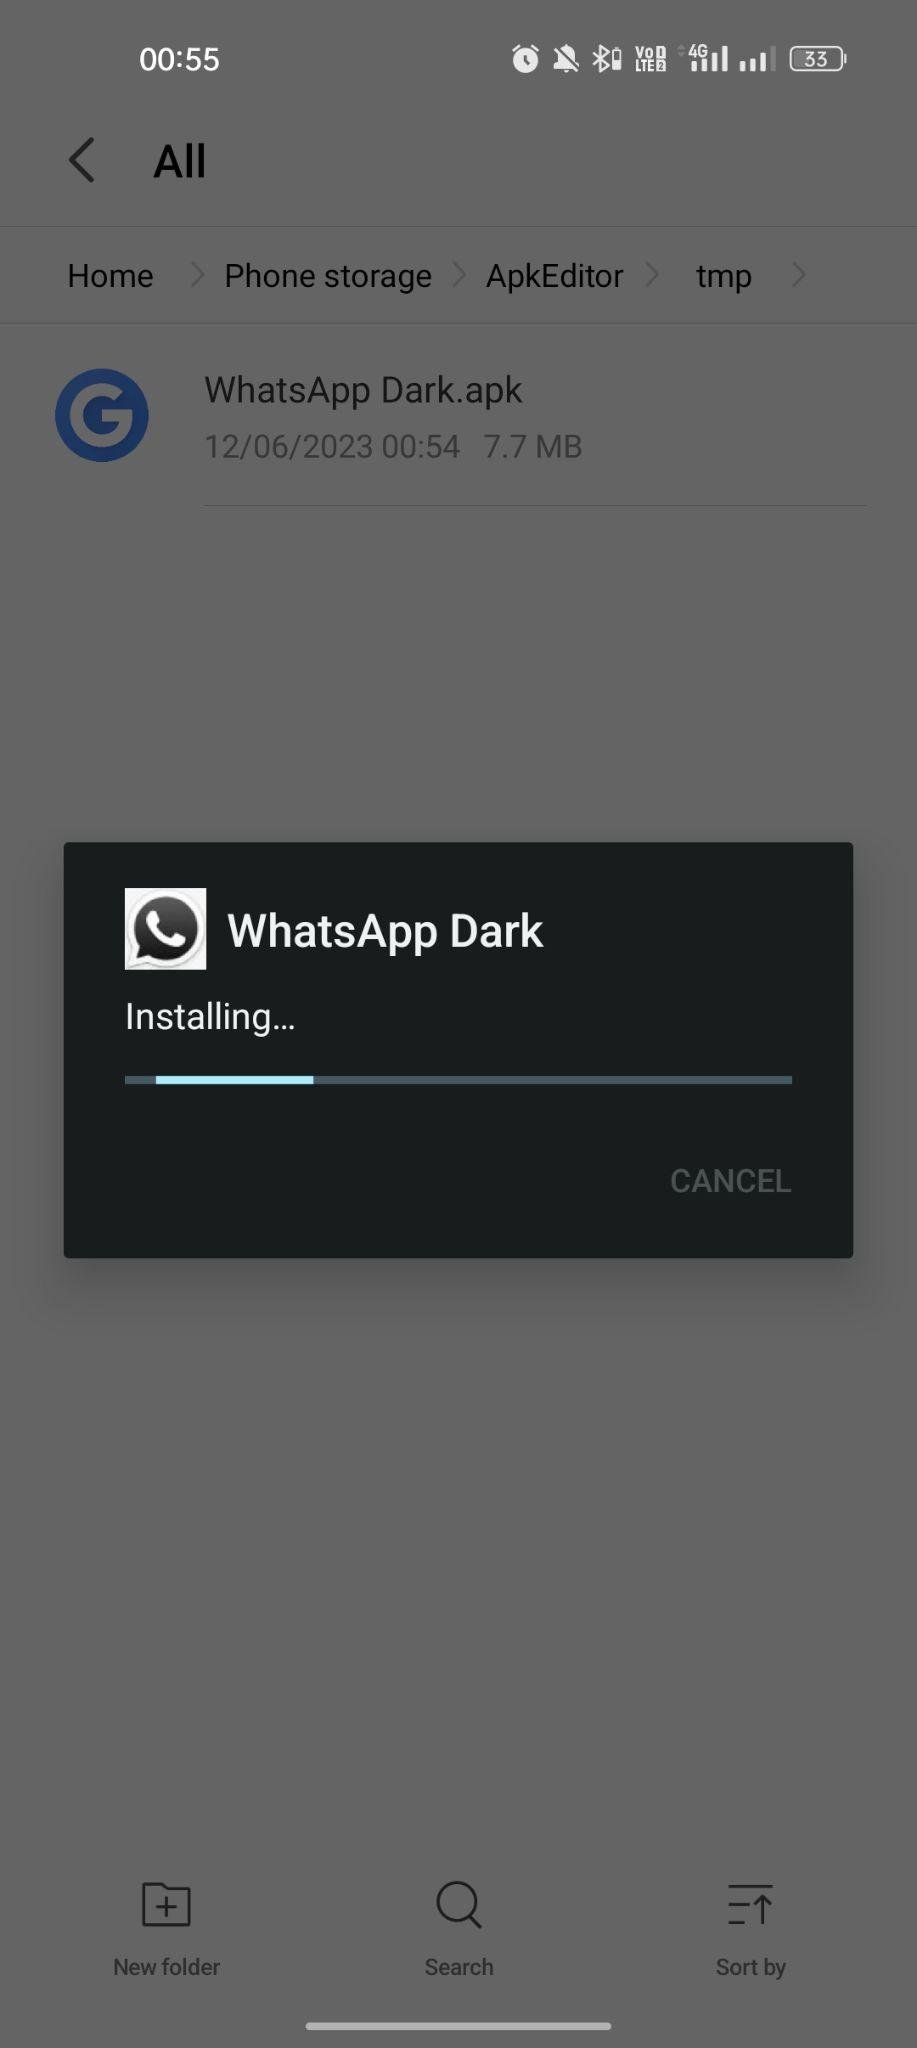 WhatsApp Dark apk installing